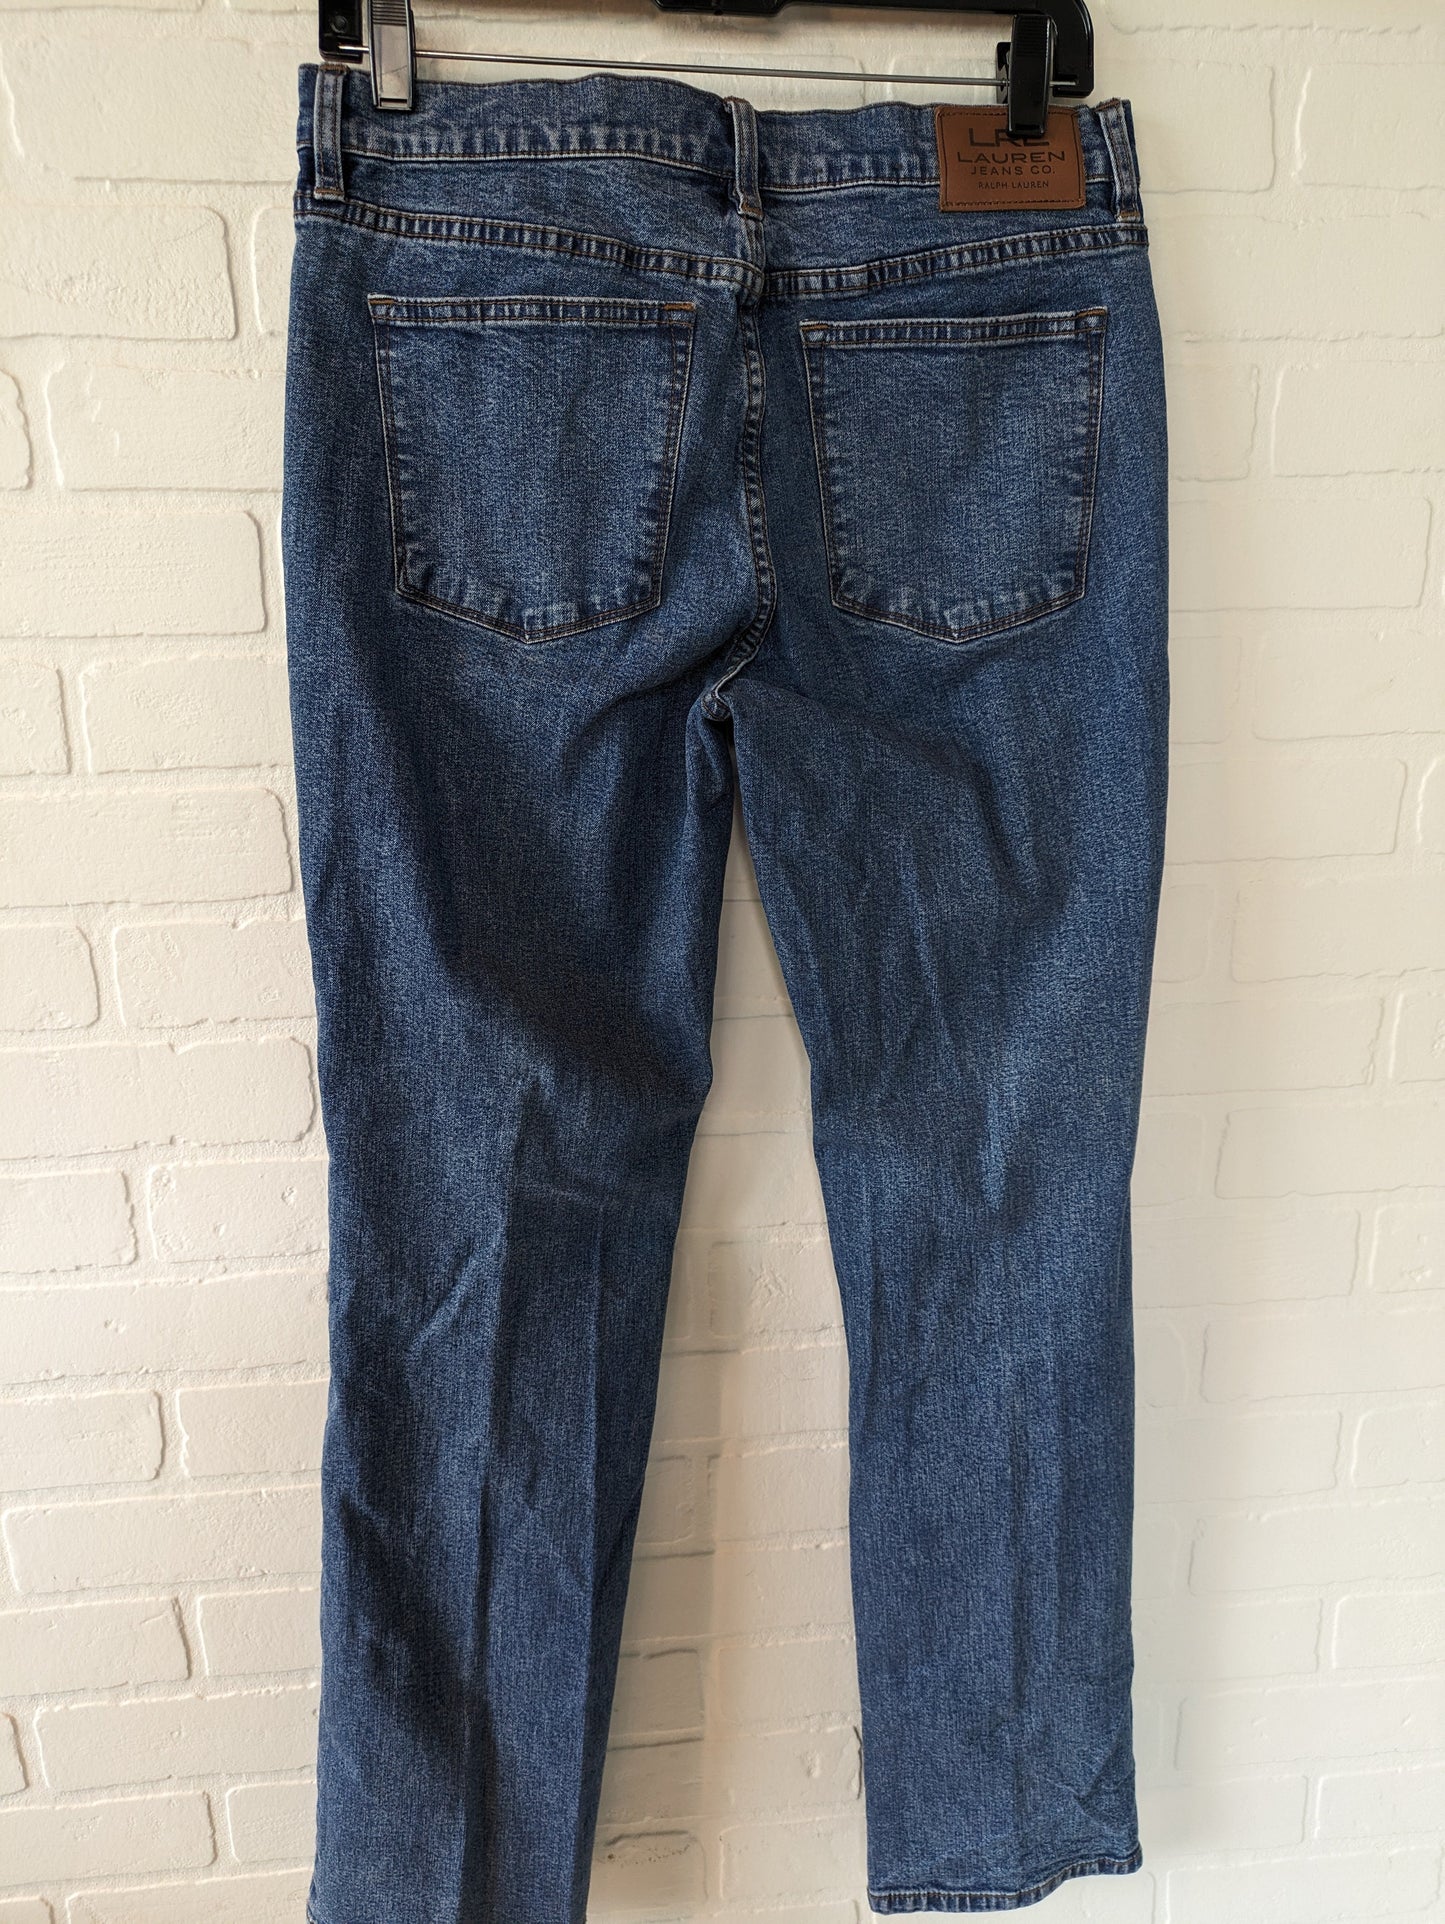 Jeans Straight By Lauren By Ralph Lauren  Size: 8